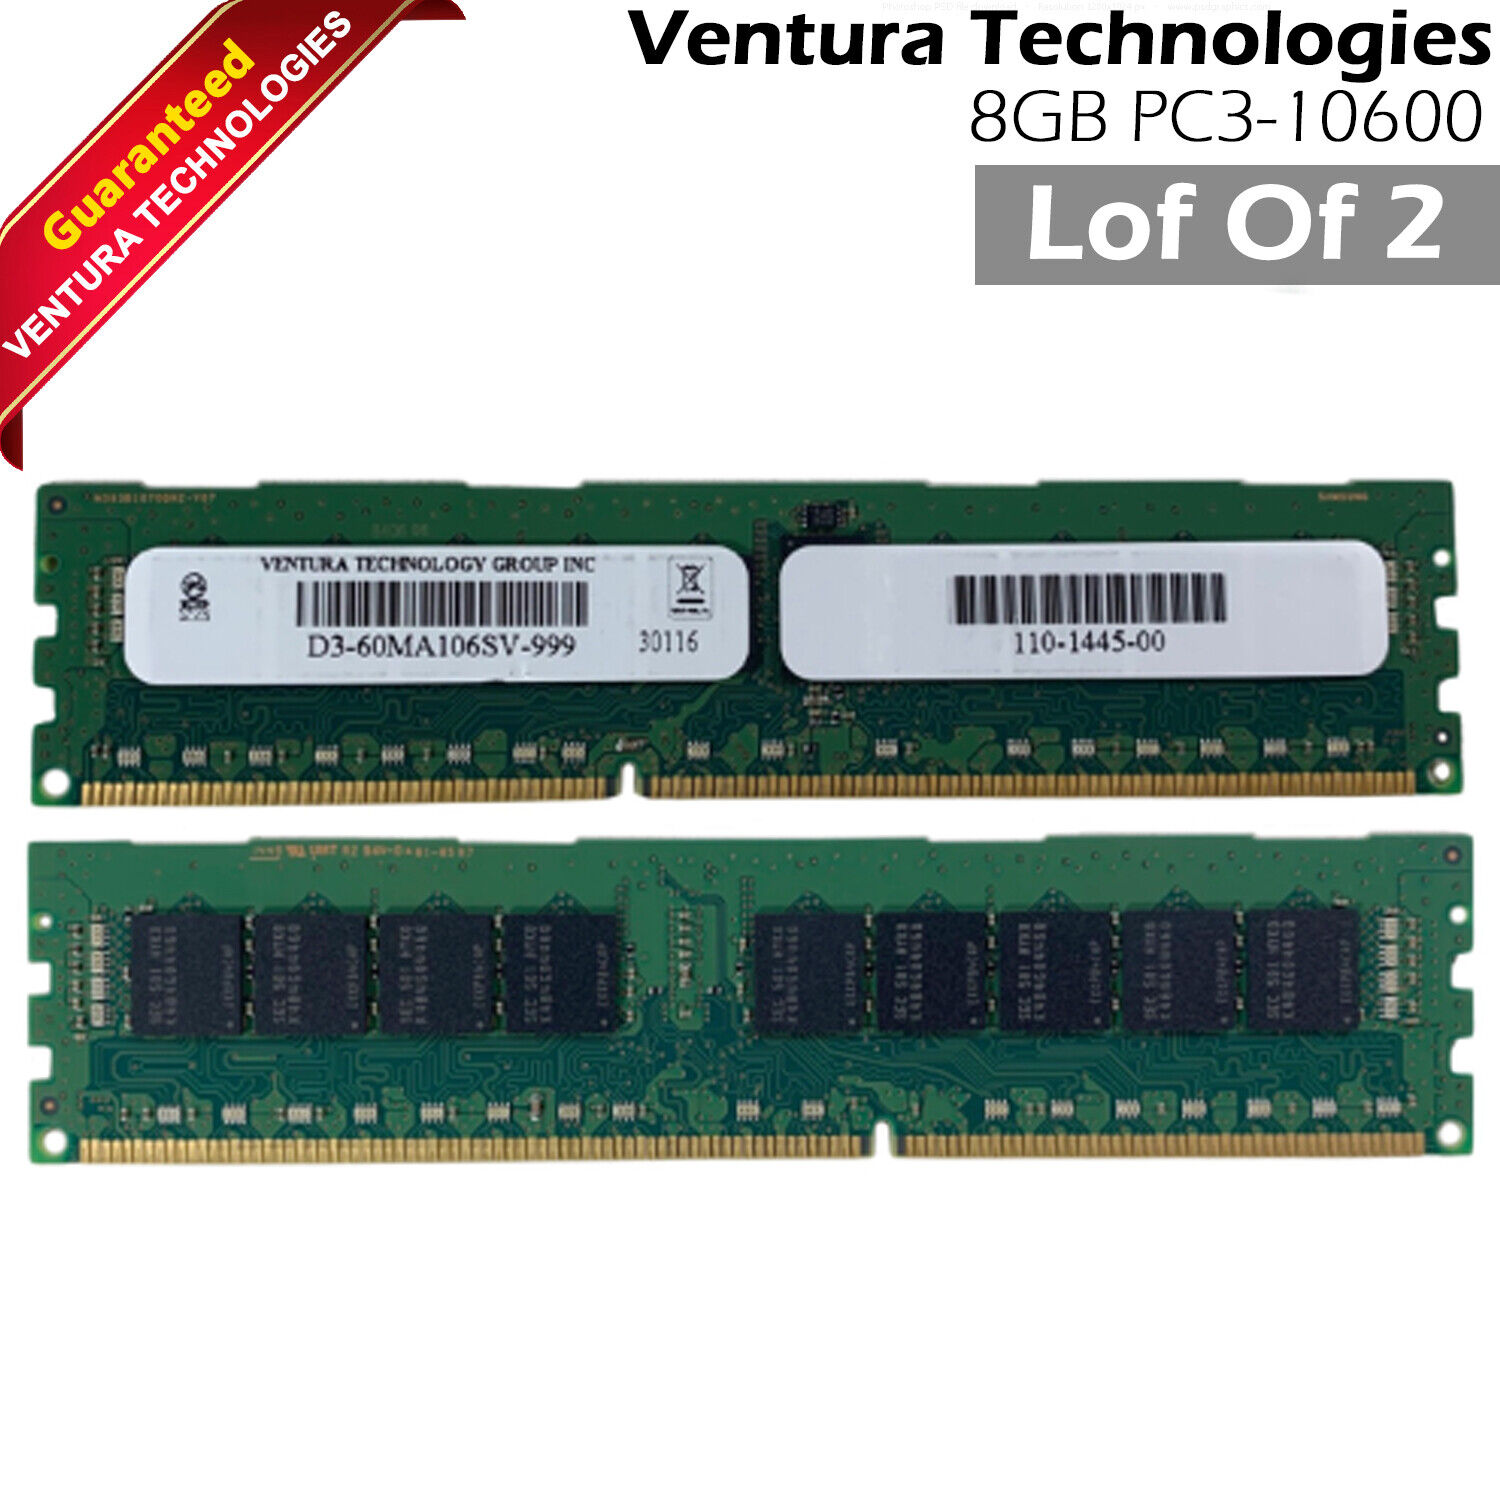 Lot Of 2 Ventura D3-60MA106SV-999 110-1445-00 2X8GB PC3-10600 DDR3 Server Memory